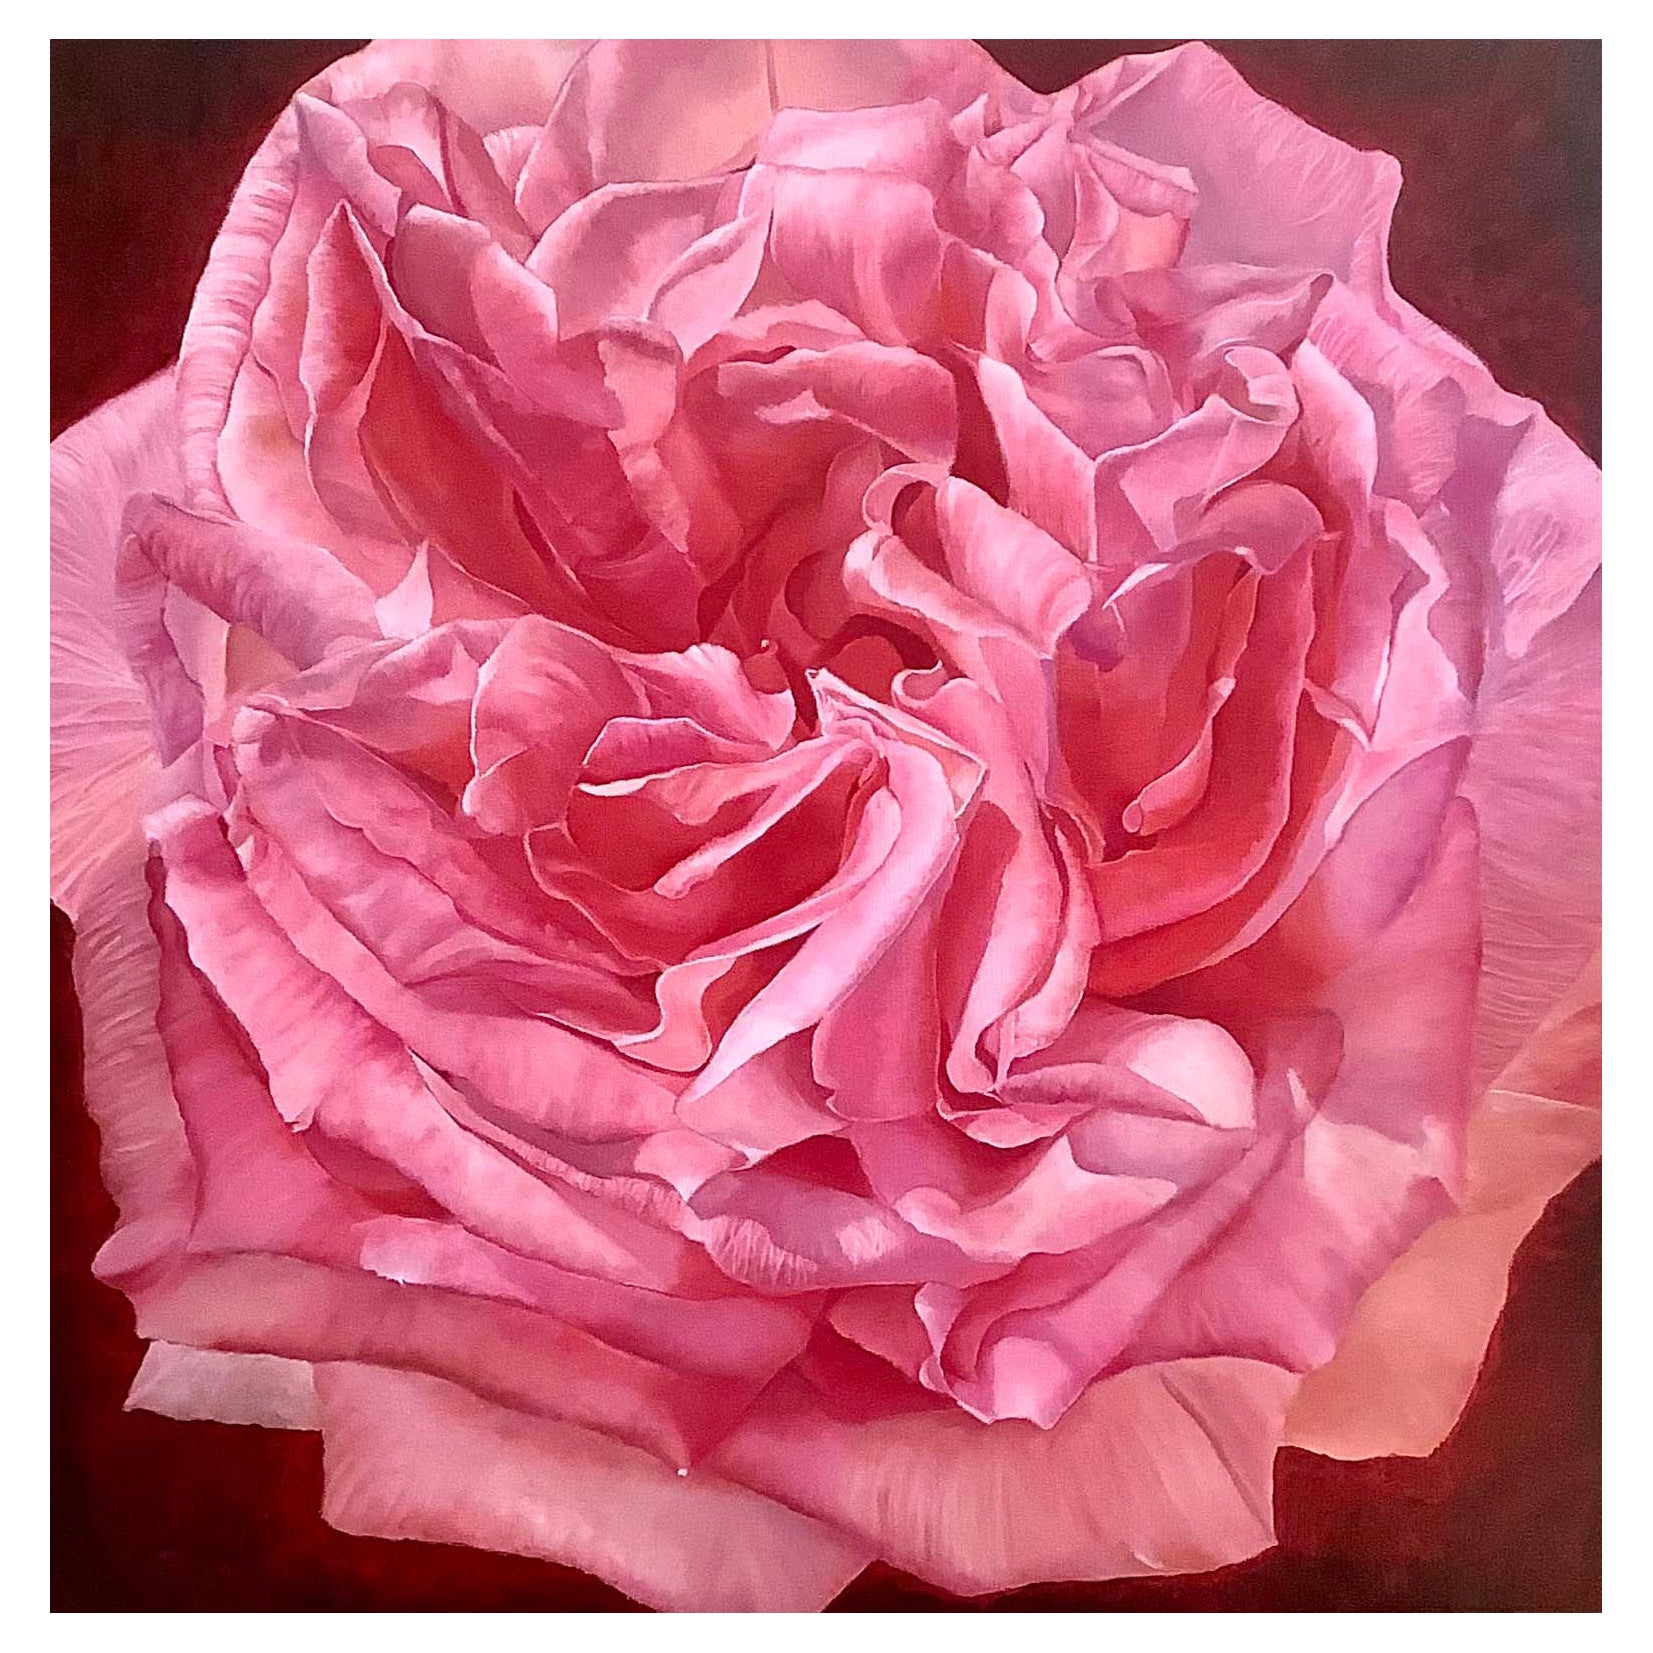 Framed Oil on Canvas "Vivienne" - Pink Color Rose by Shelly Gurton For Sale